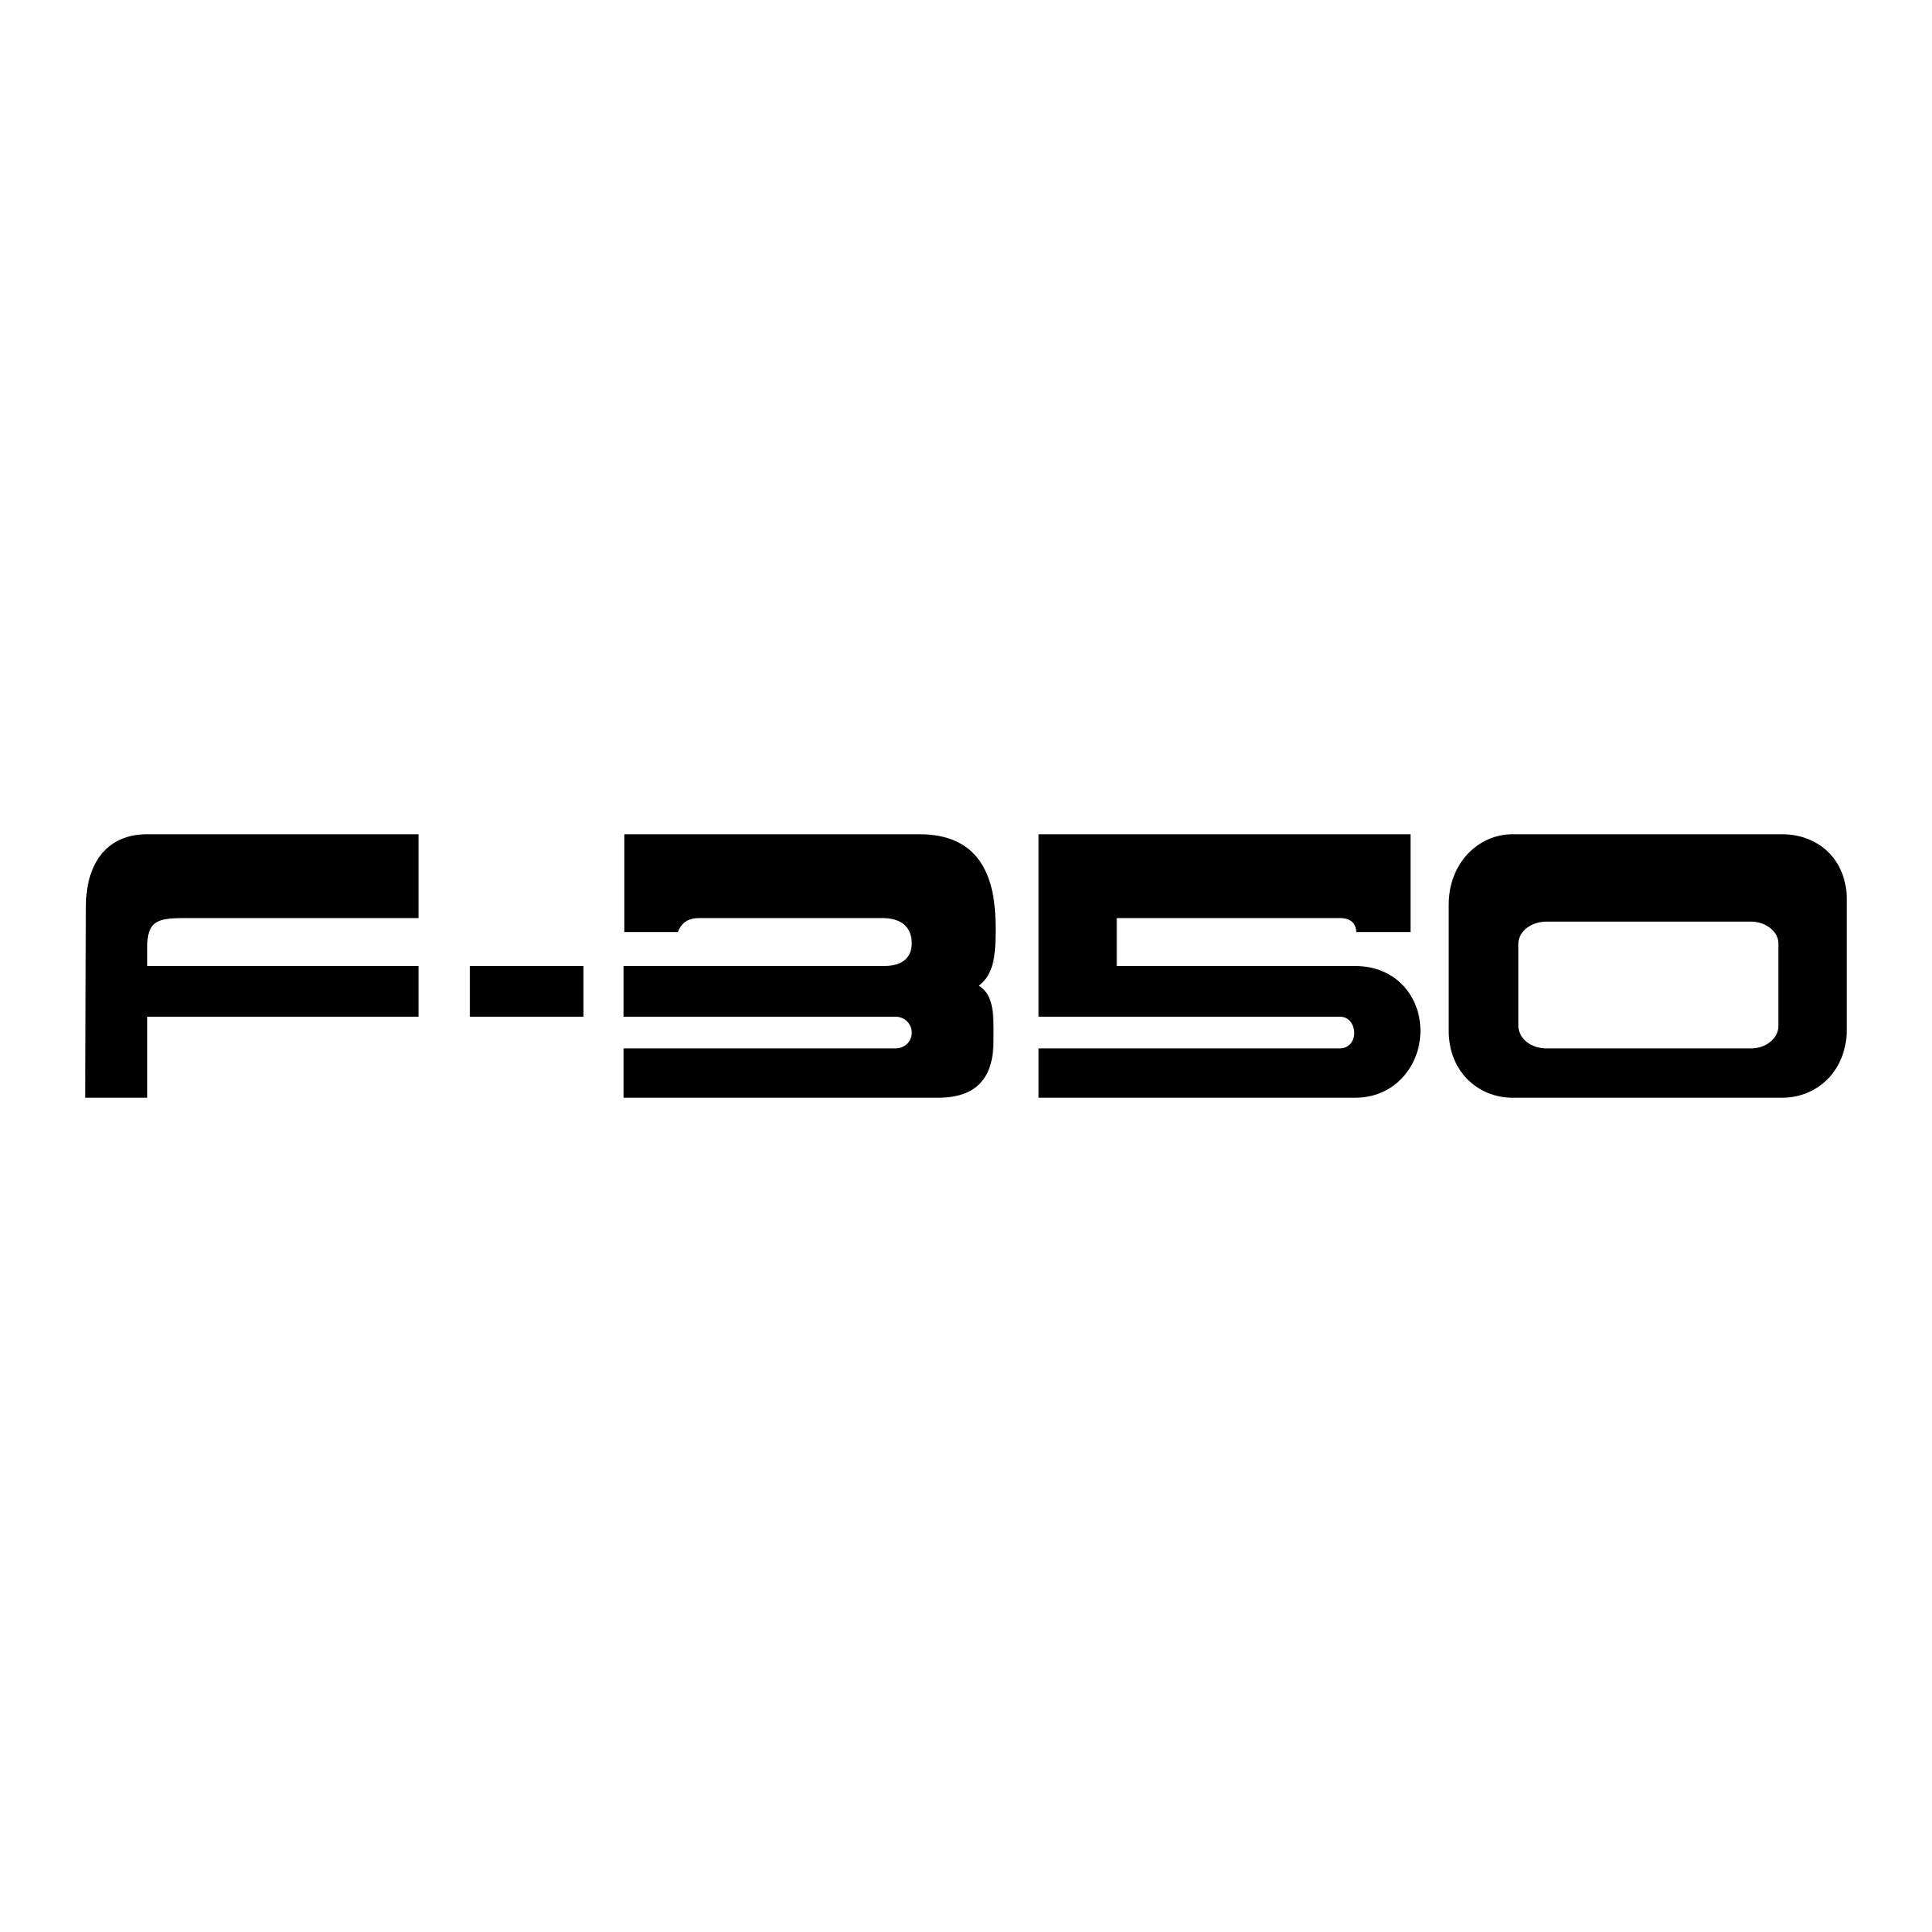 F-350 Logo - F 350 Logo PNG Transparent & SVG Vector - Freebie Supply